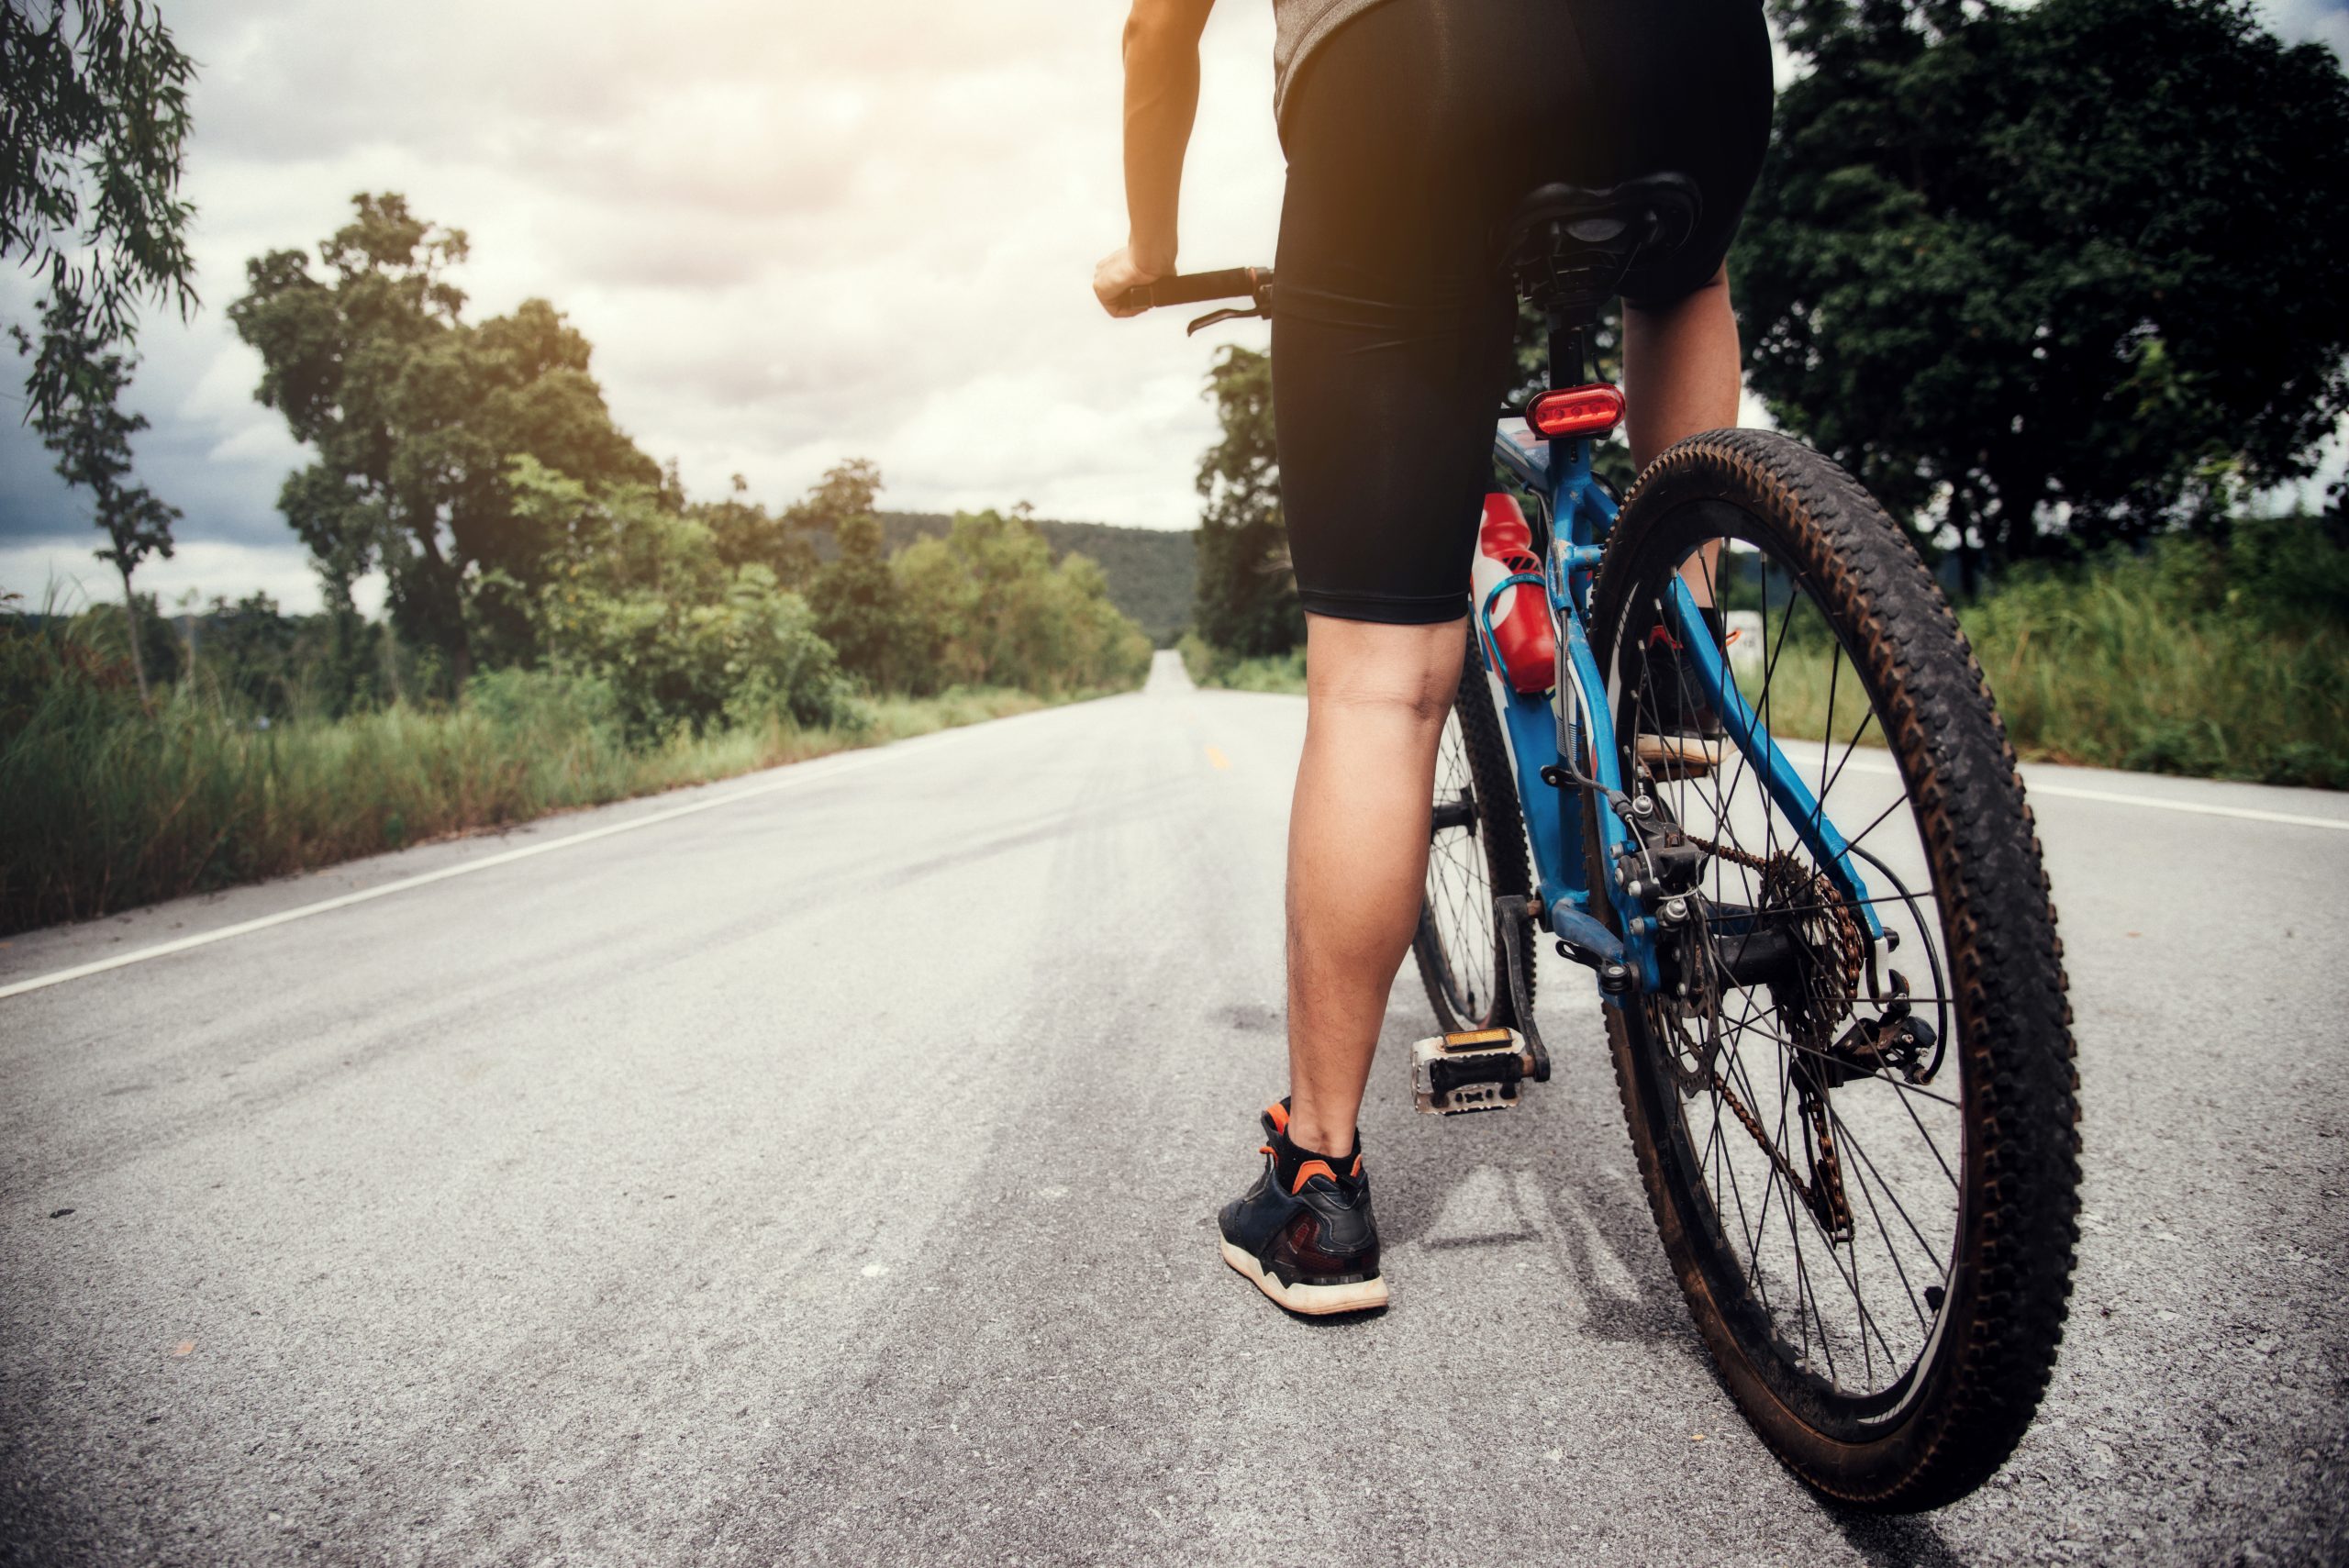 The Benefits of Biking 8 Miles